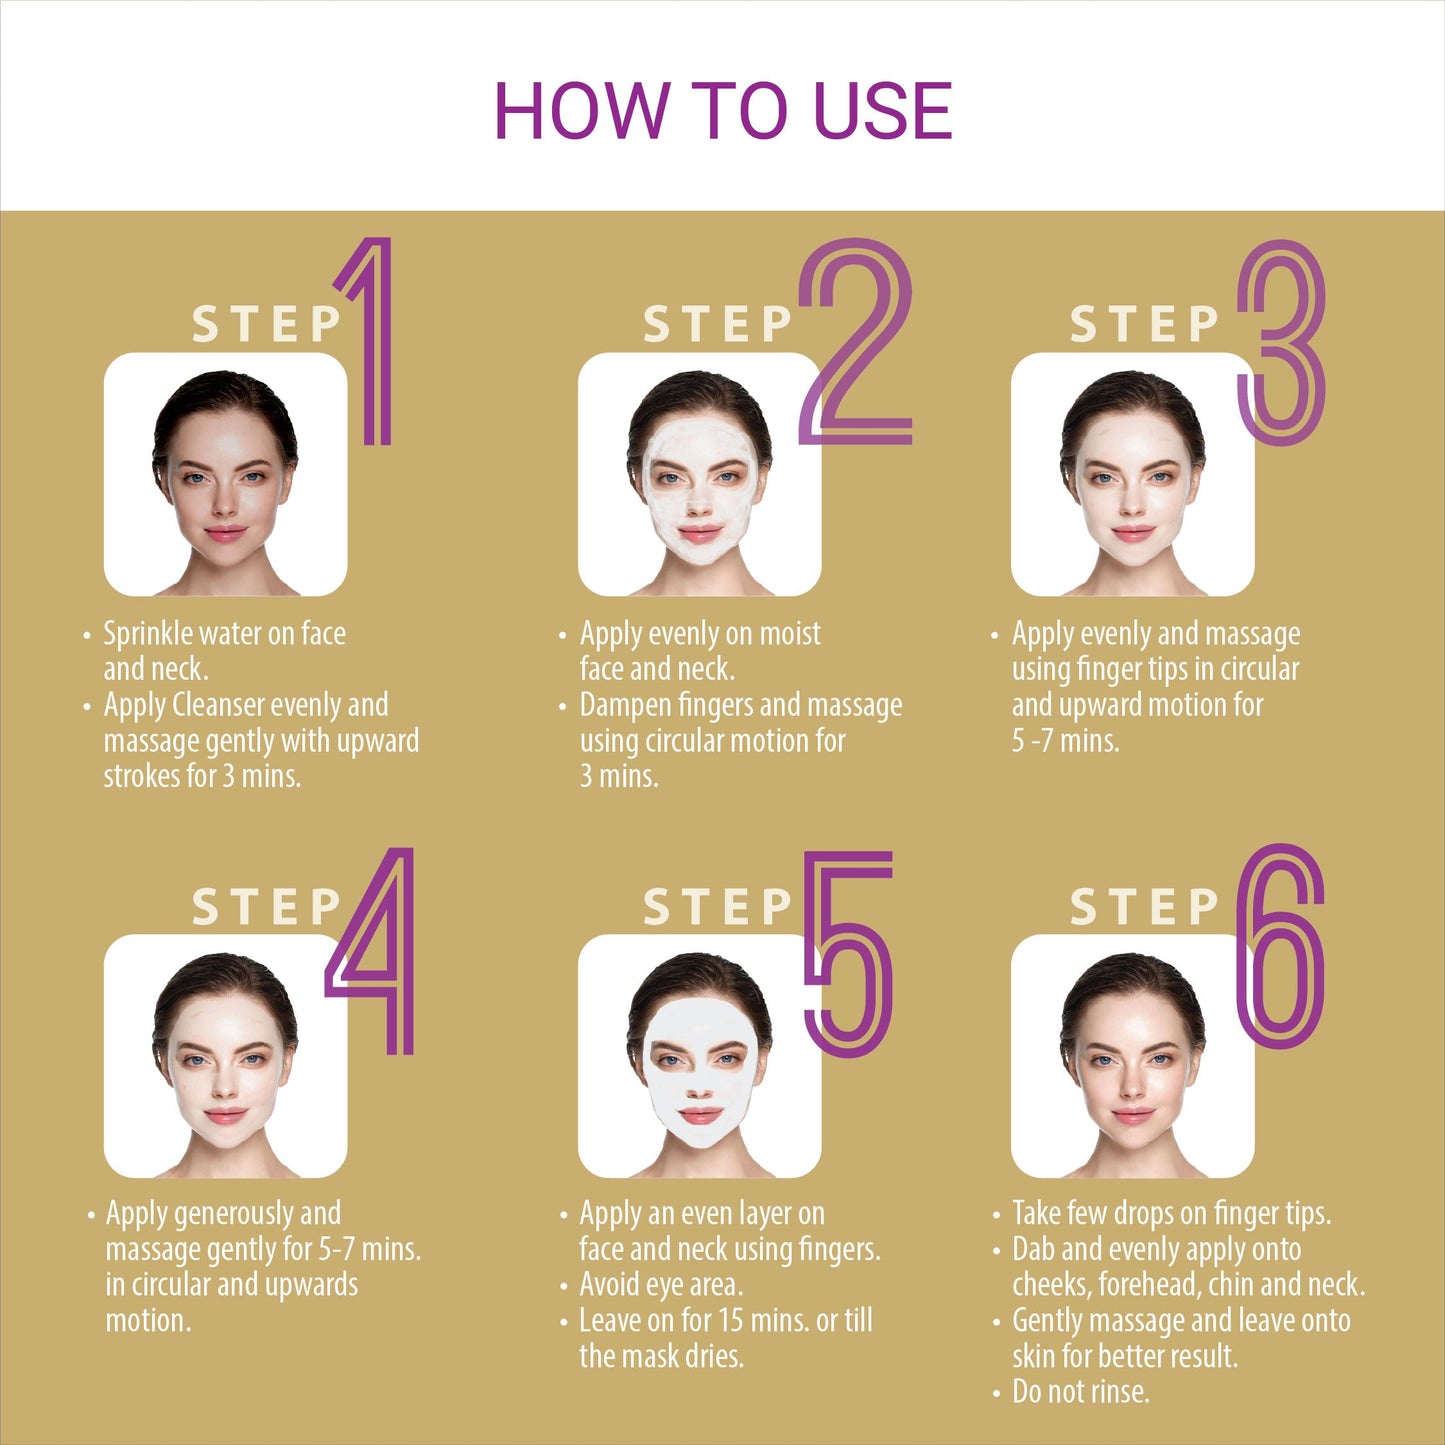 How To Use Iba Golden Glow Gold Facial Kit Description